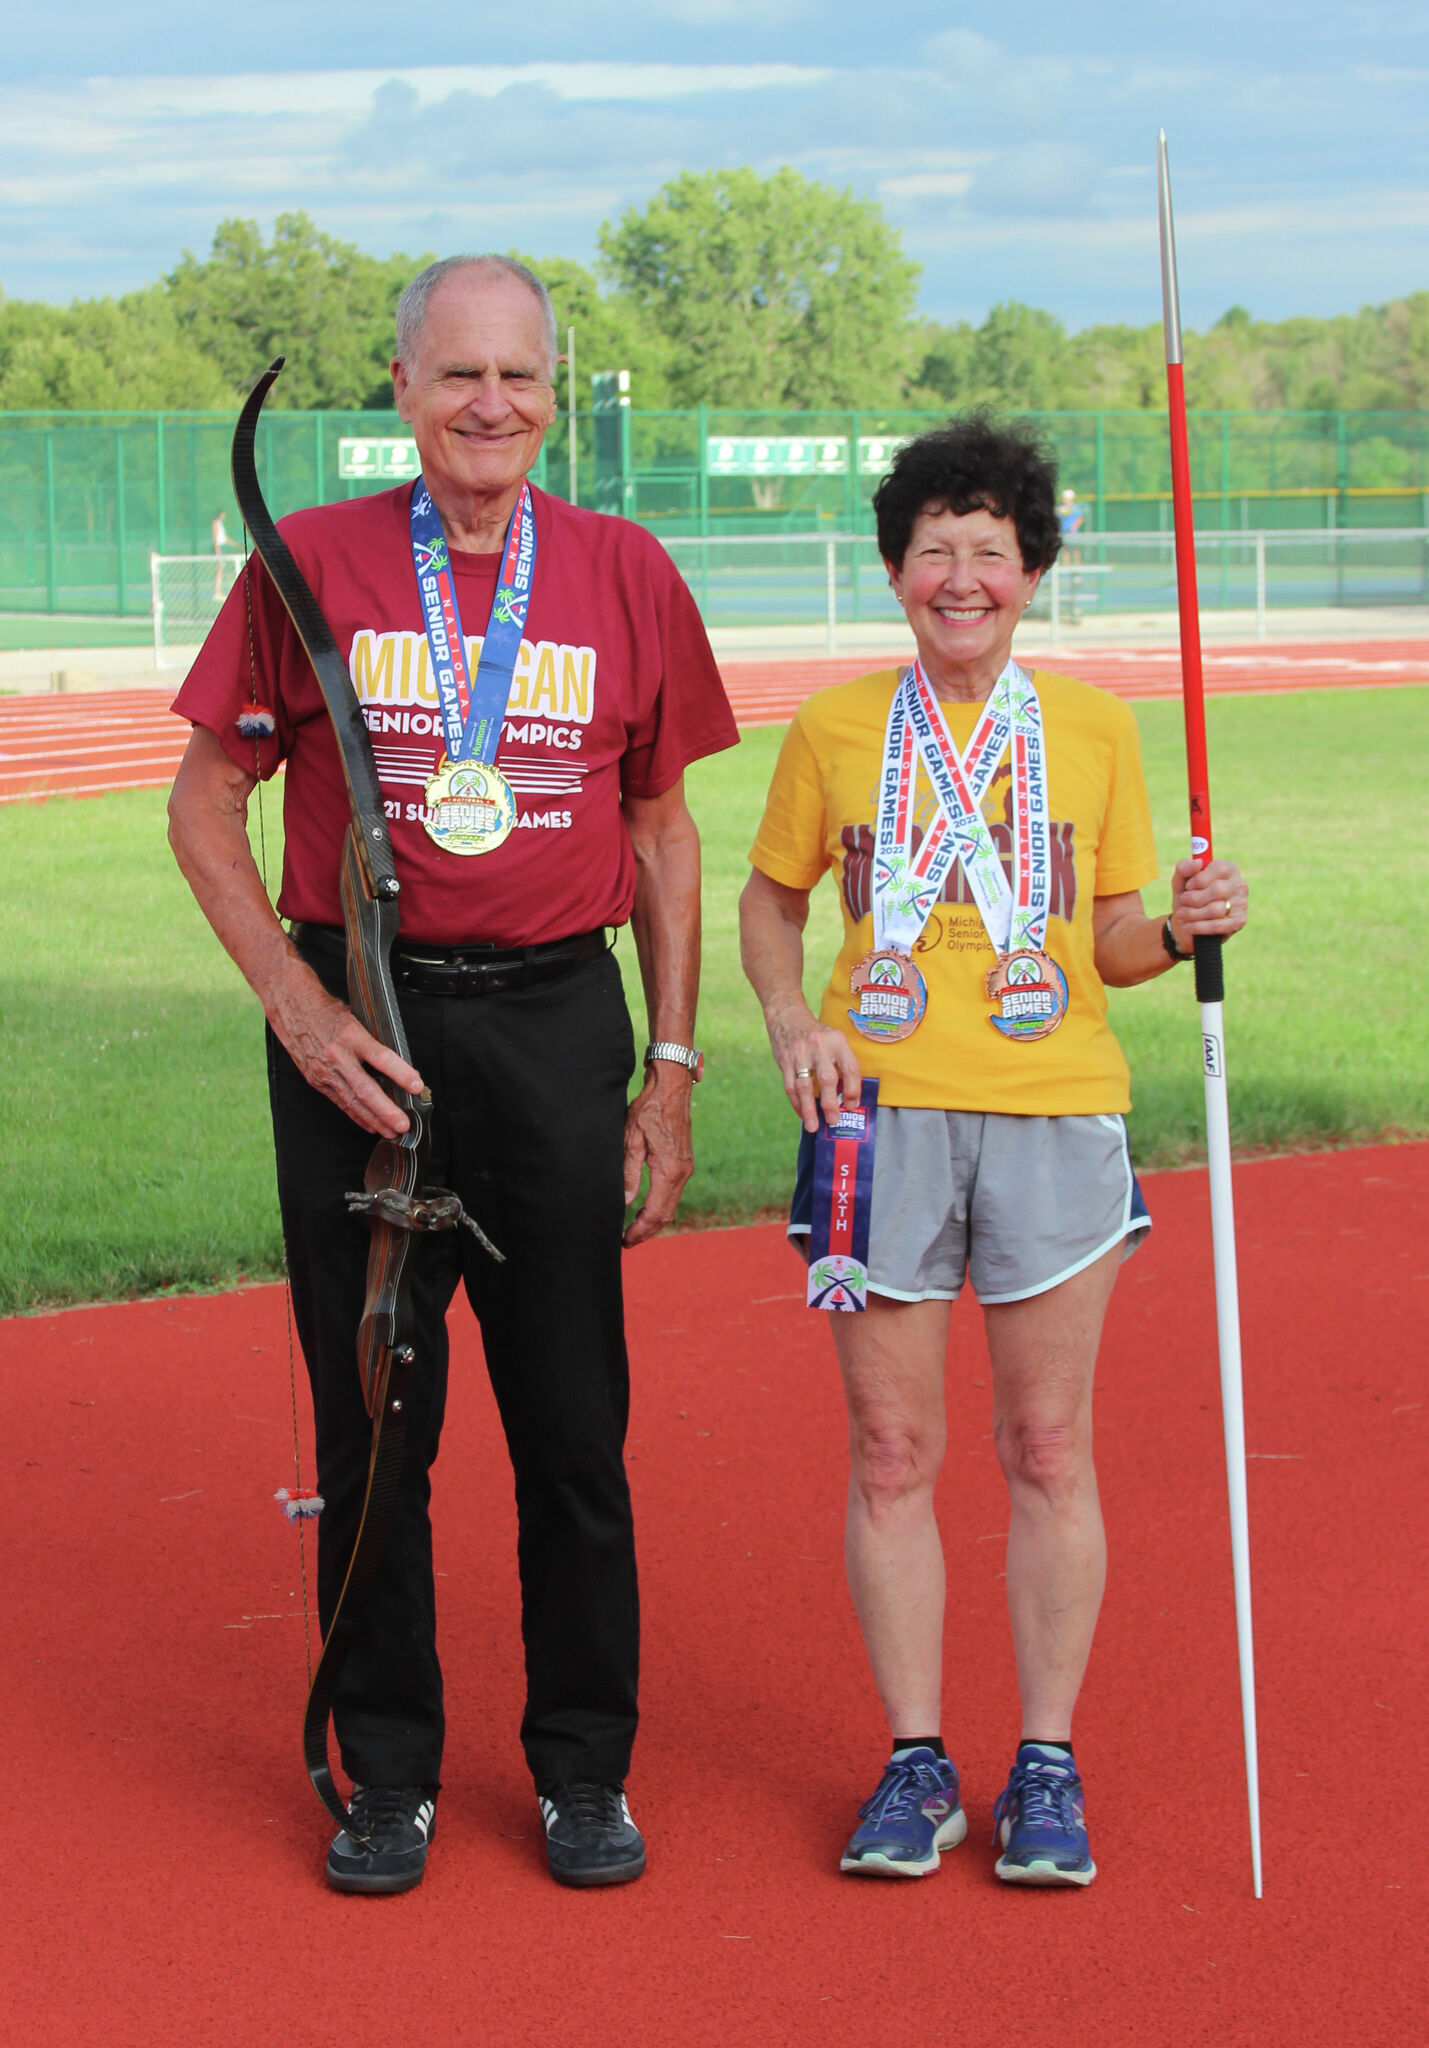 Midland athletes medal at National Senior Games